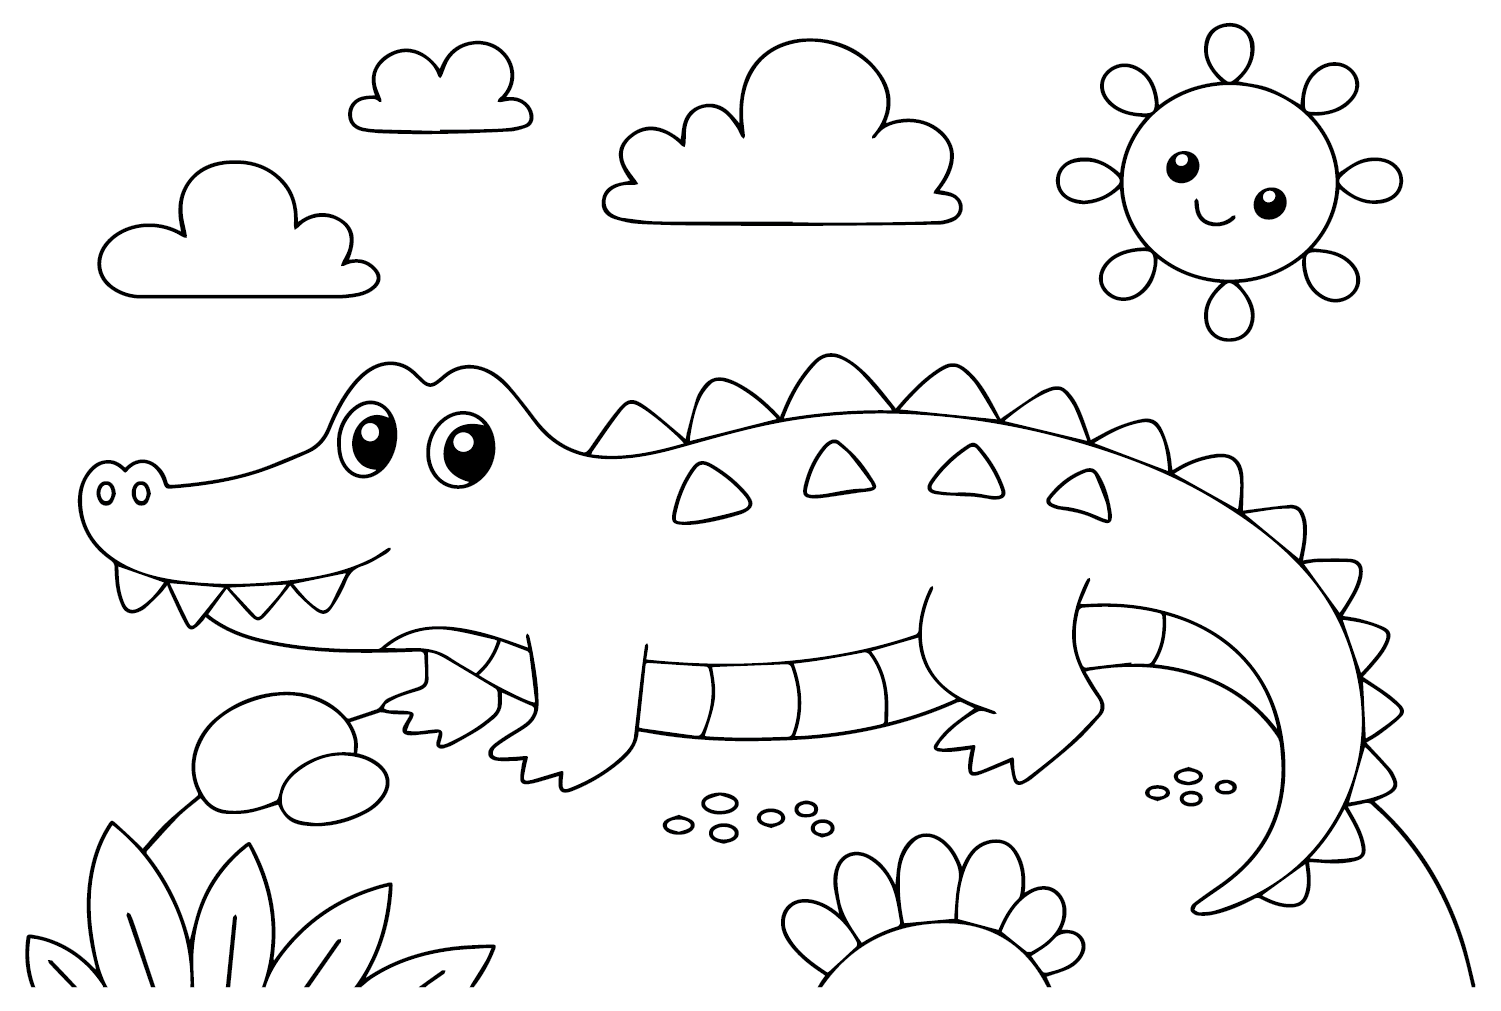 Crocodile coloring pag